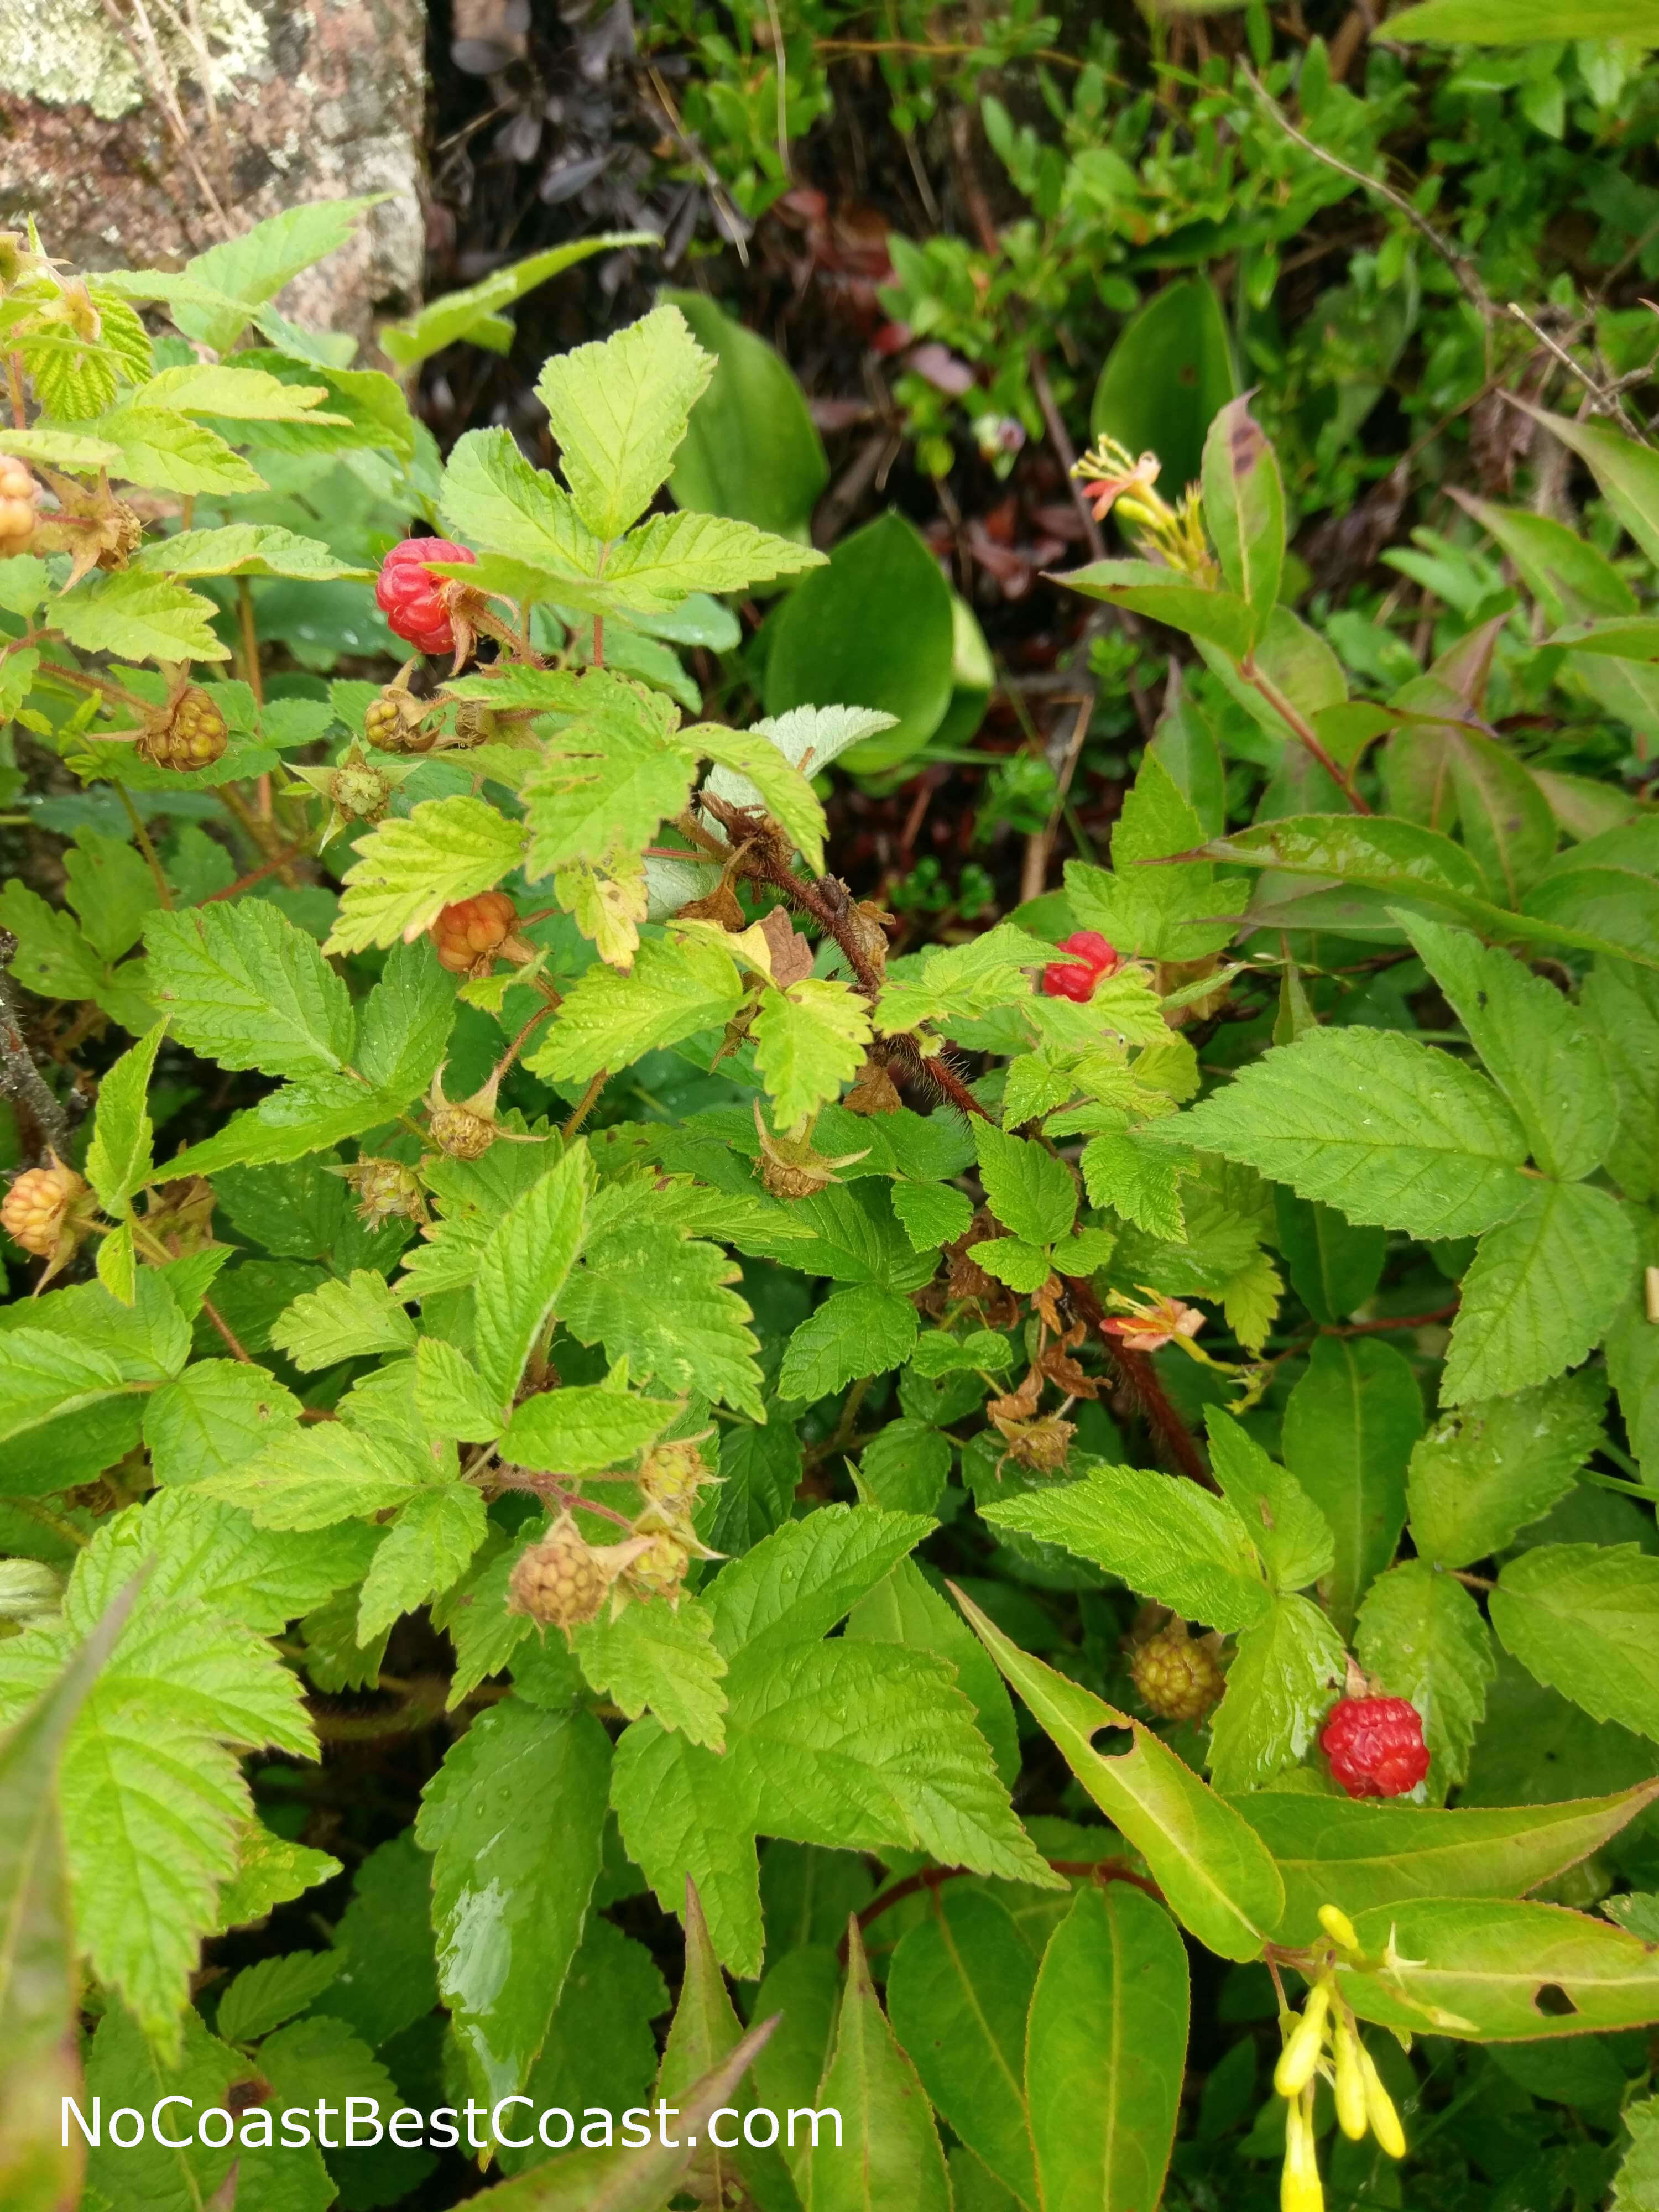 Wild raspberries grow here too!